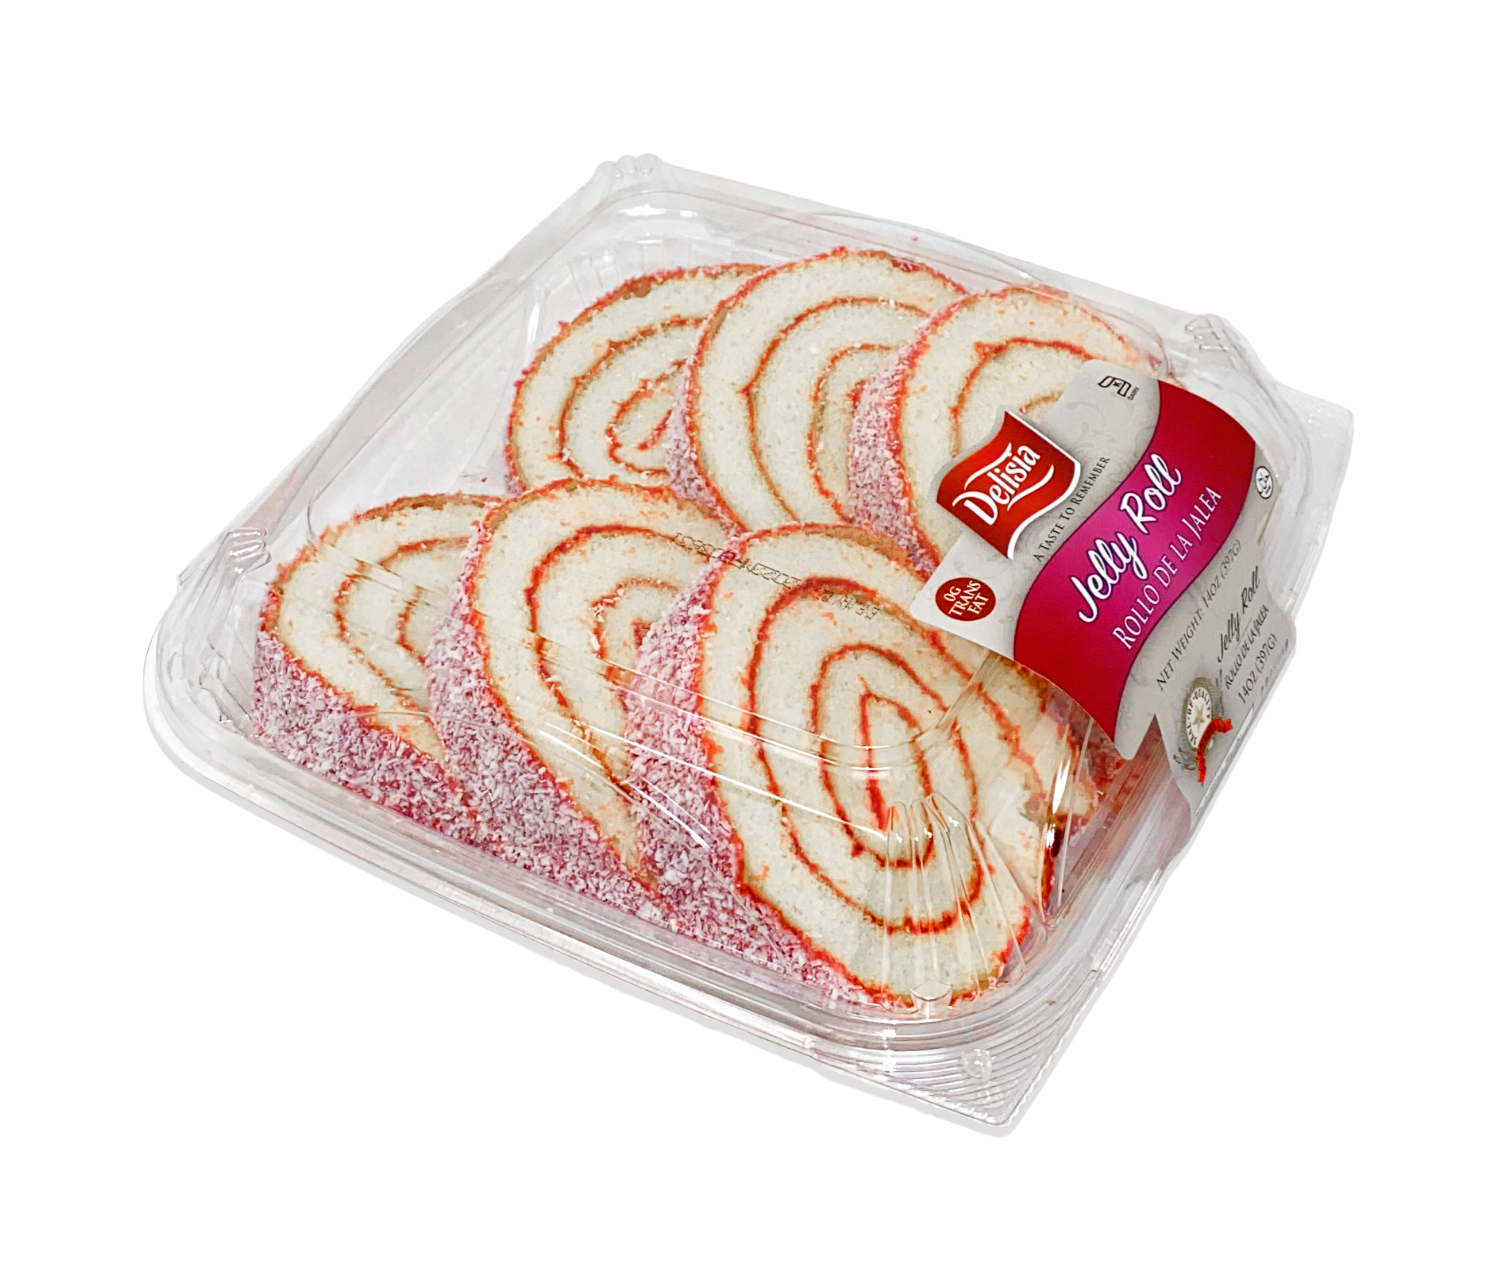 Delisia Jelly Roll 0G Trans Fat| Snacks, Cake Snacks, Breakfast Cakes, Fresh Gourmet Bakery Dessert | Pre-Sliced Jelly Roll Cakes Box, Delicious Food Gift Idea for Women, Men, Kids | Snacks Cake for Delivery | 14 oz (397g)